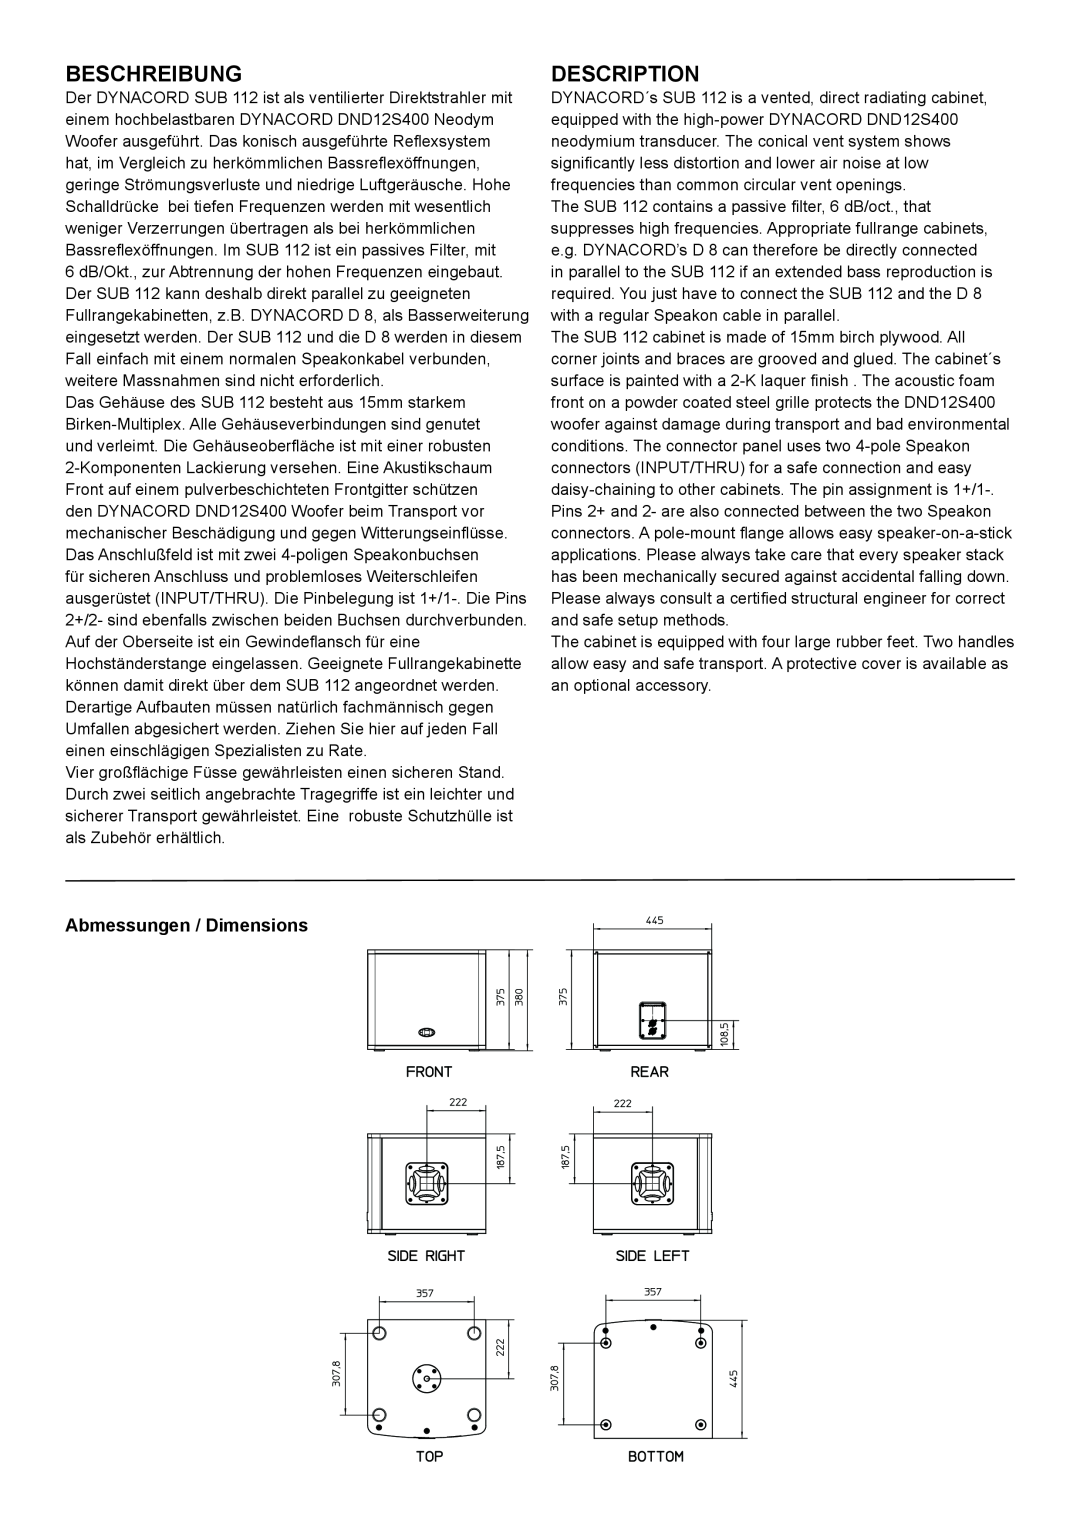 Dynacord SUB 112 specifications Beschreibung, Description, Abmessungen / Dimensions 